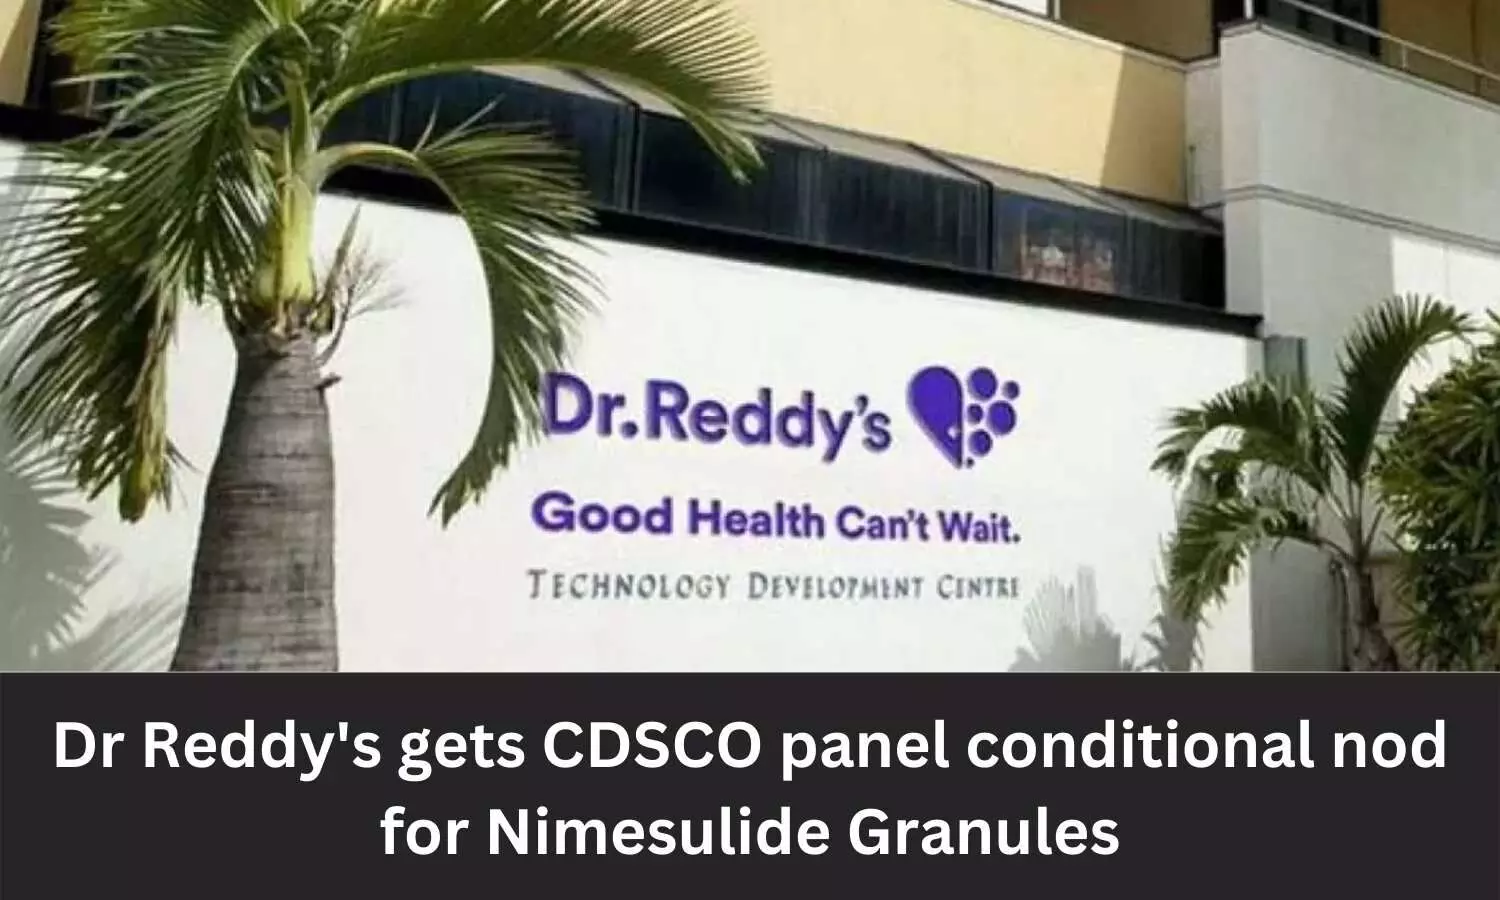 Dr Reddys Labs bags CDSCO panel conditional nod to manufacture, market Nimesulide Granules